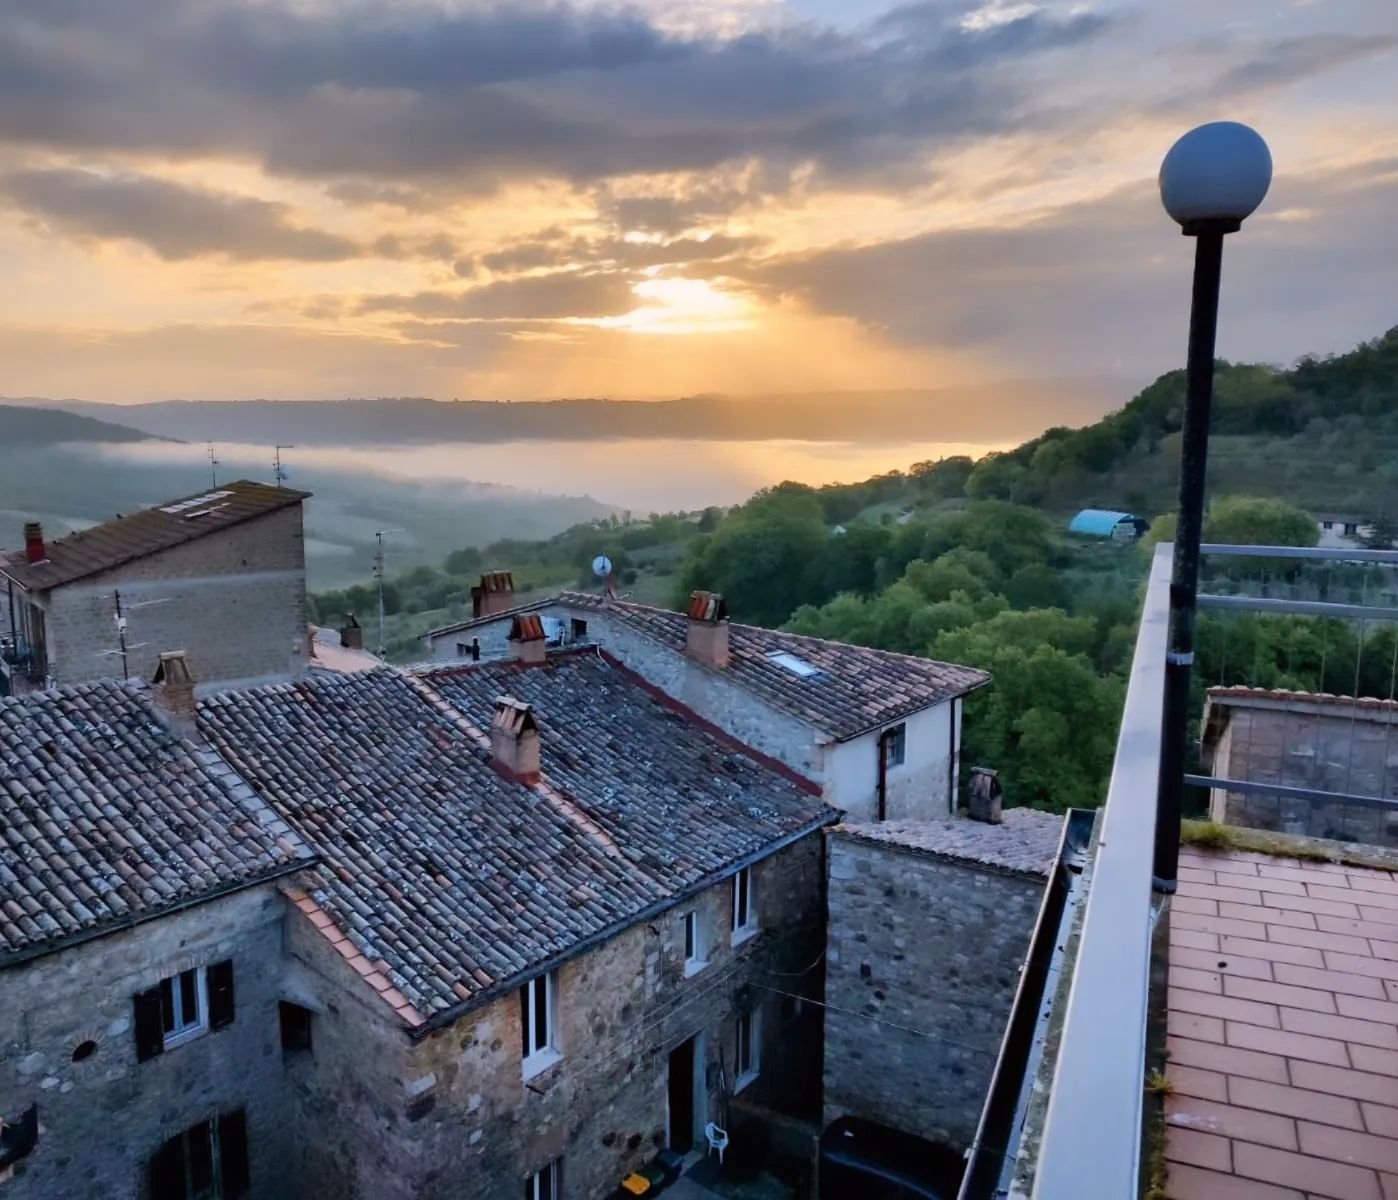 Magical sunrise from our terrace 😍✨
.
.
.
.
#dreamingofitaly #italiandreams #mydream #sunriseinitaly #sunrise #alba #sunriseinumbria #umbria #umbriaitaly #umbriaitalia